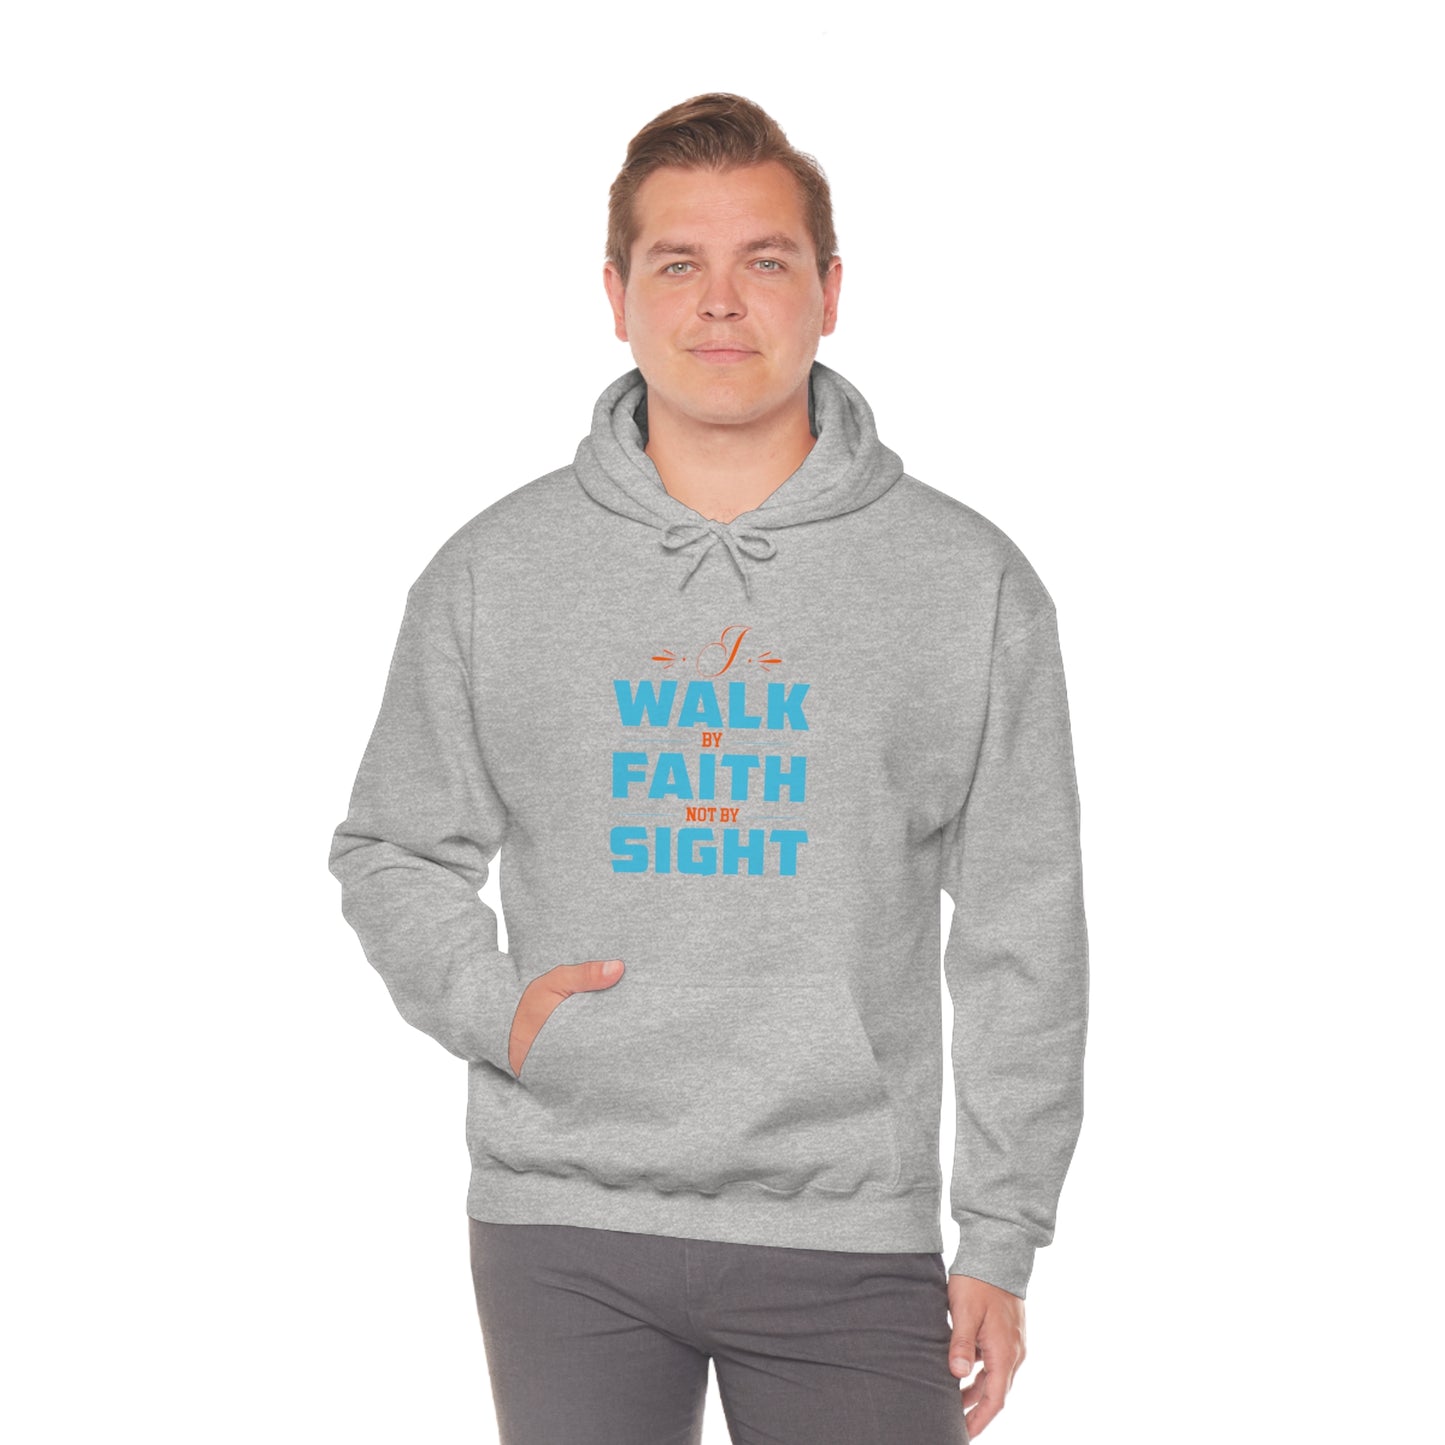 I Walk By Faith Not By Sight Unisex Hooded Sweatshirt